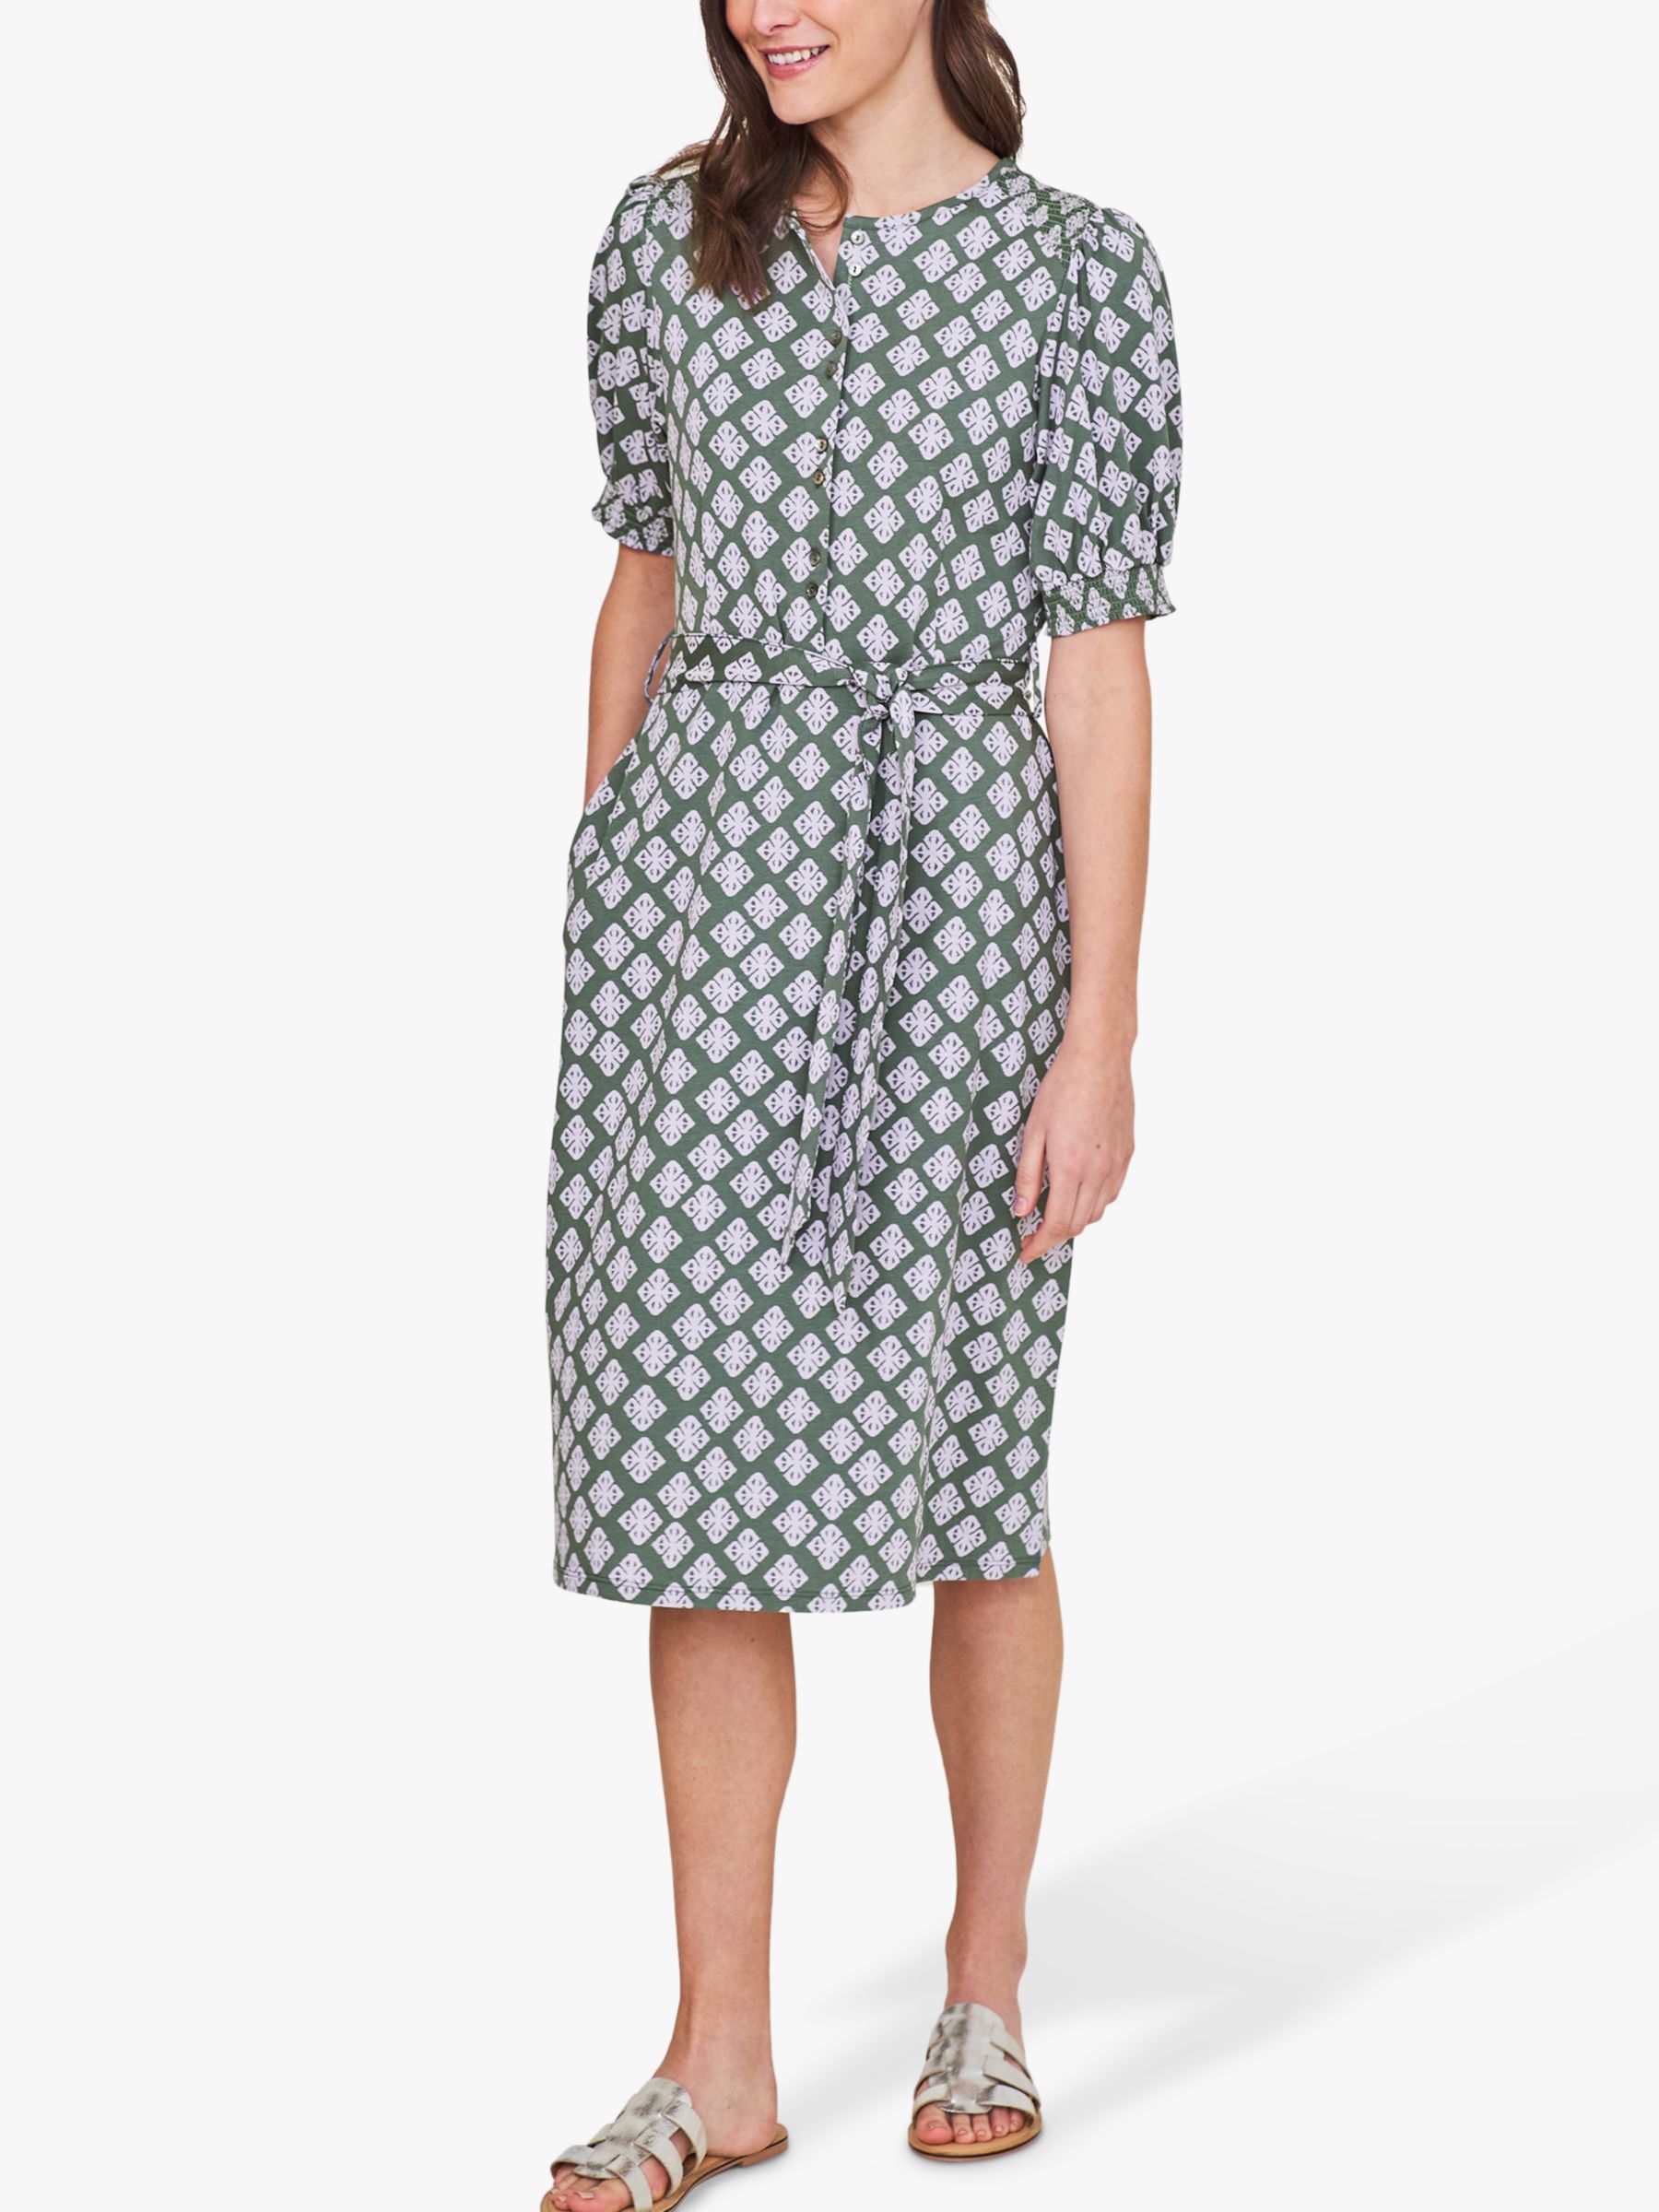 White Stuff Mora Geometric Print Dress, Green/Multi